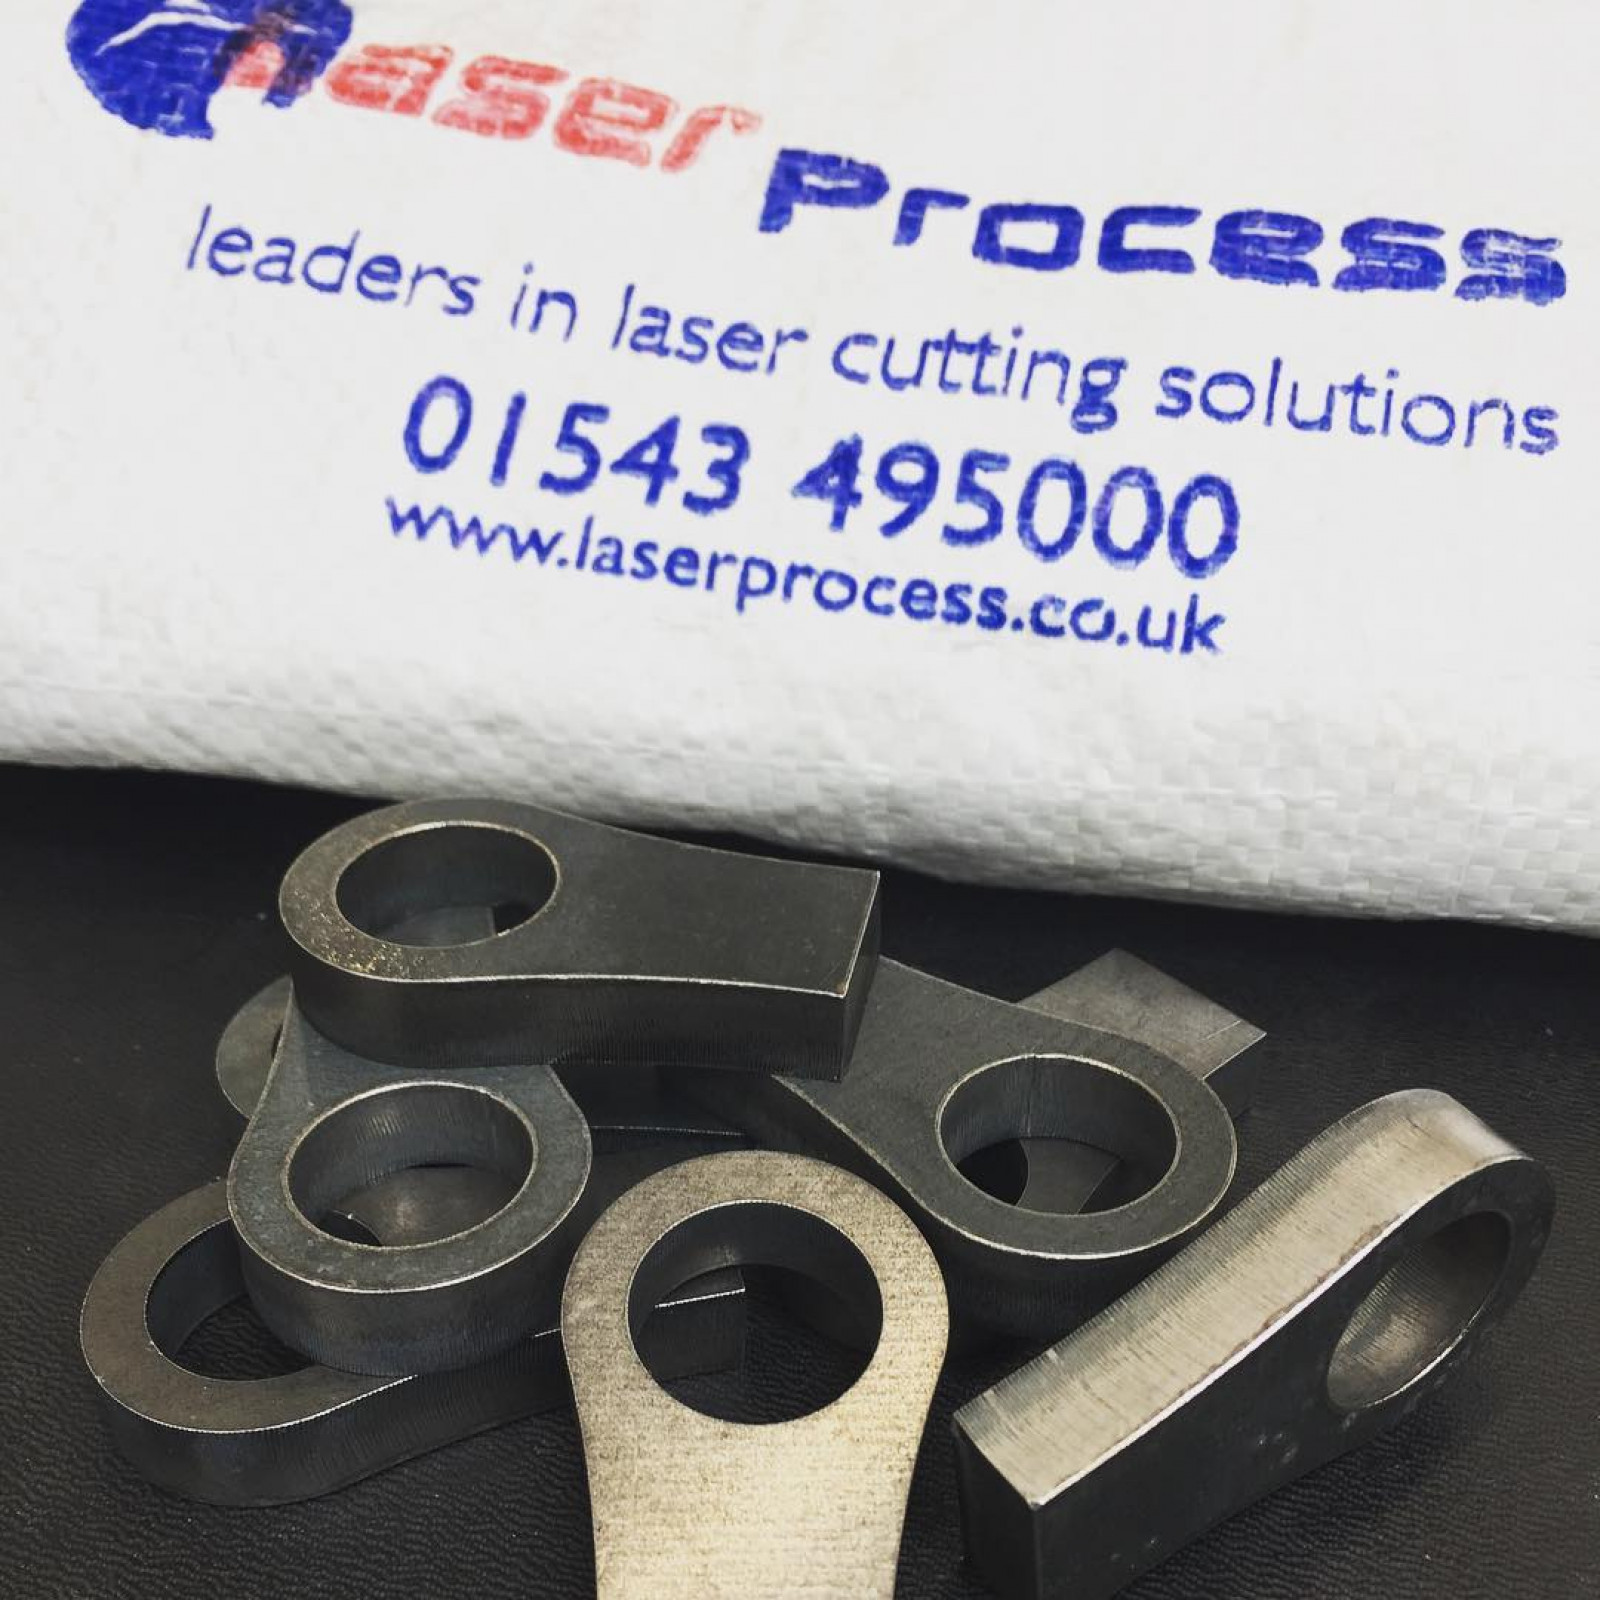 Laser Process Ltd Sponsor UWR